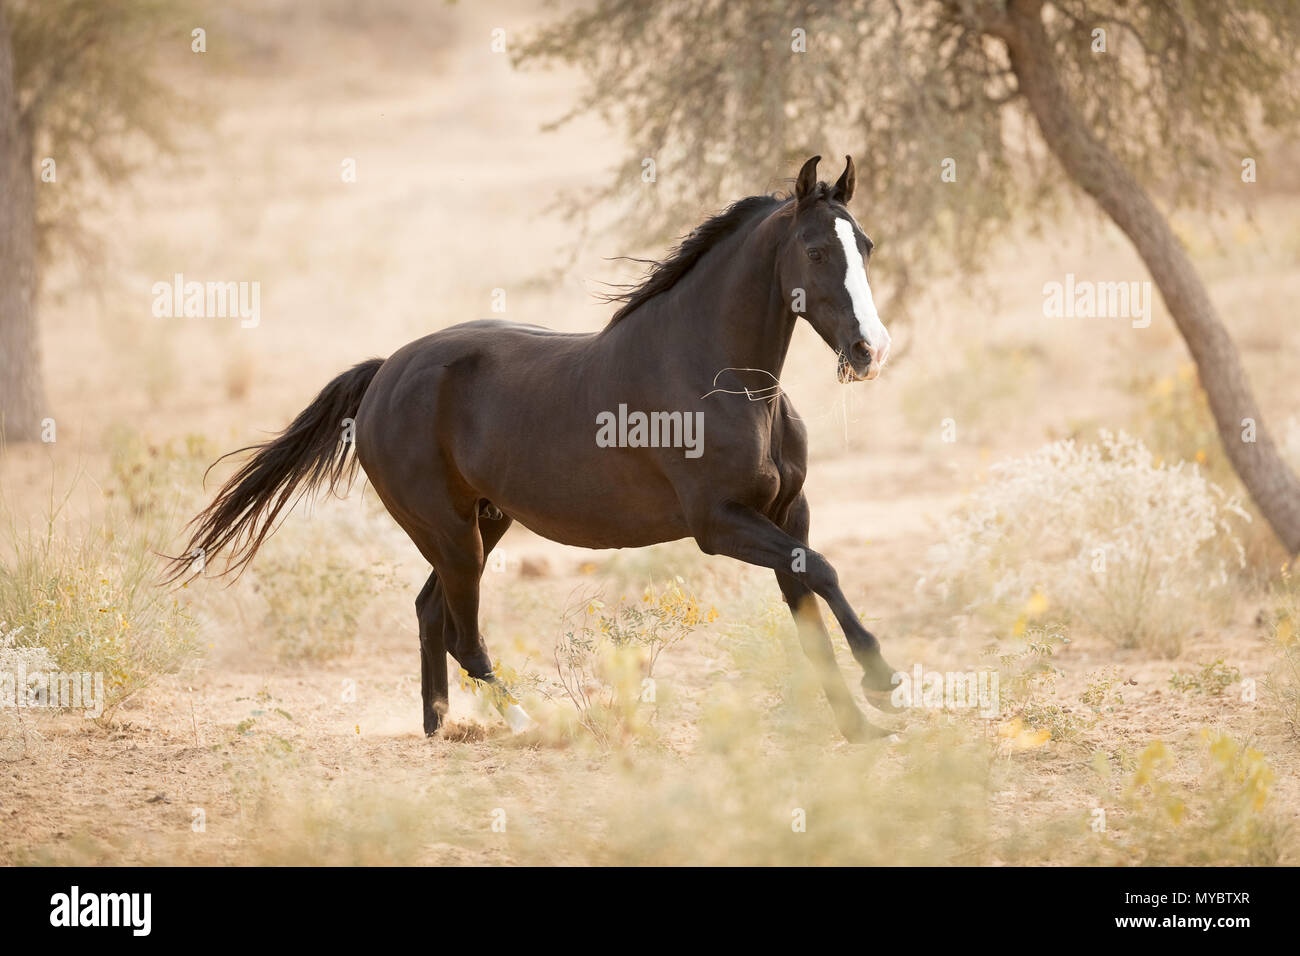 Marwari Horse. Black mare galloping in semi-desert landscape. India Stock Photo